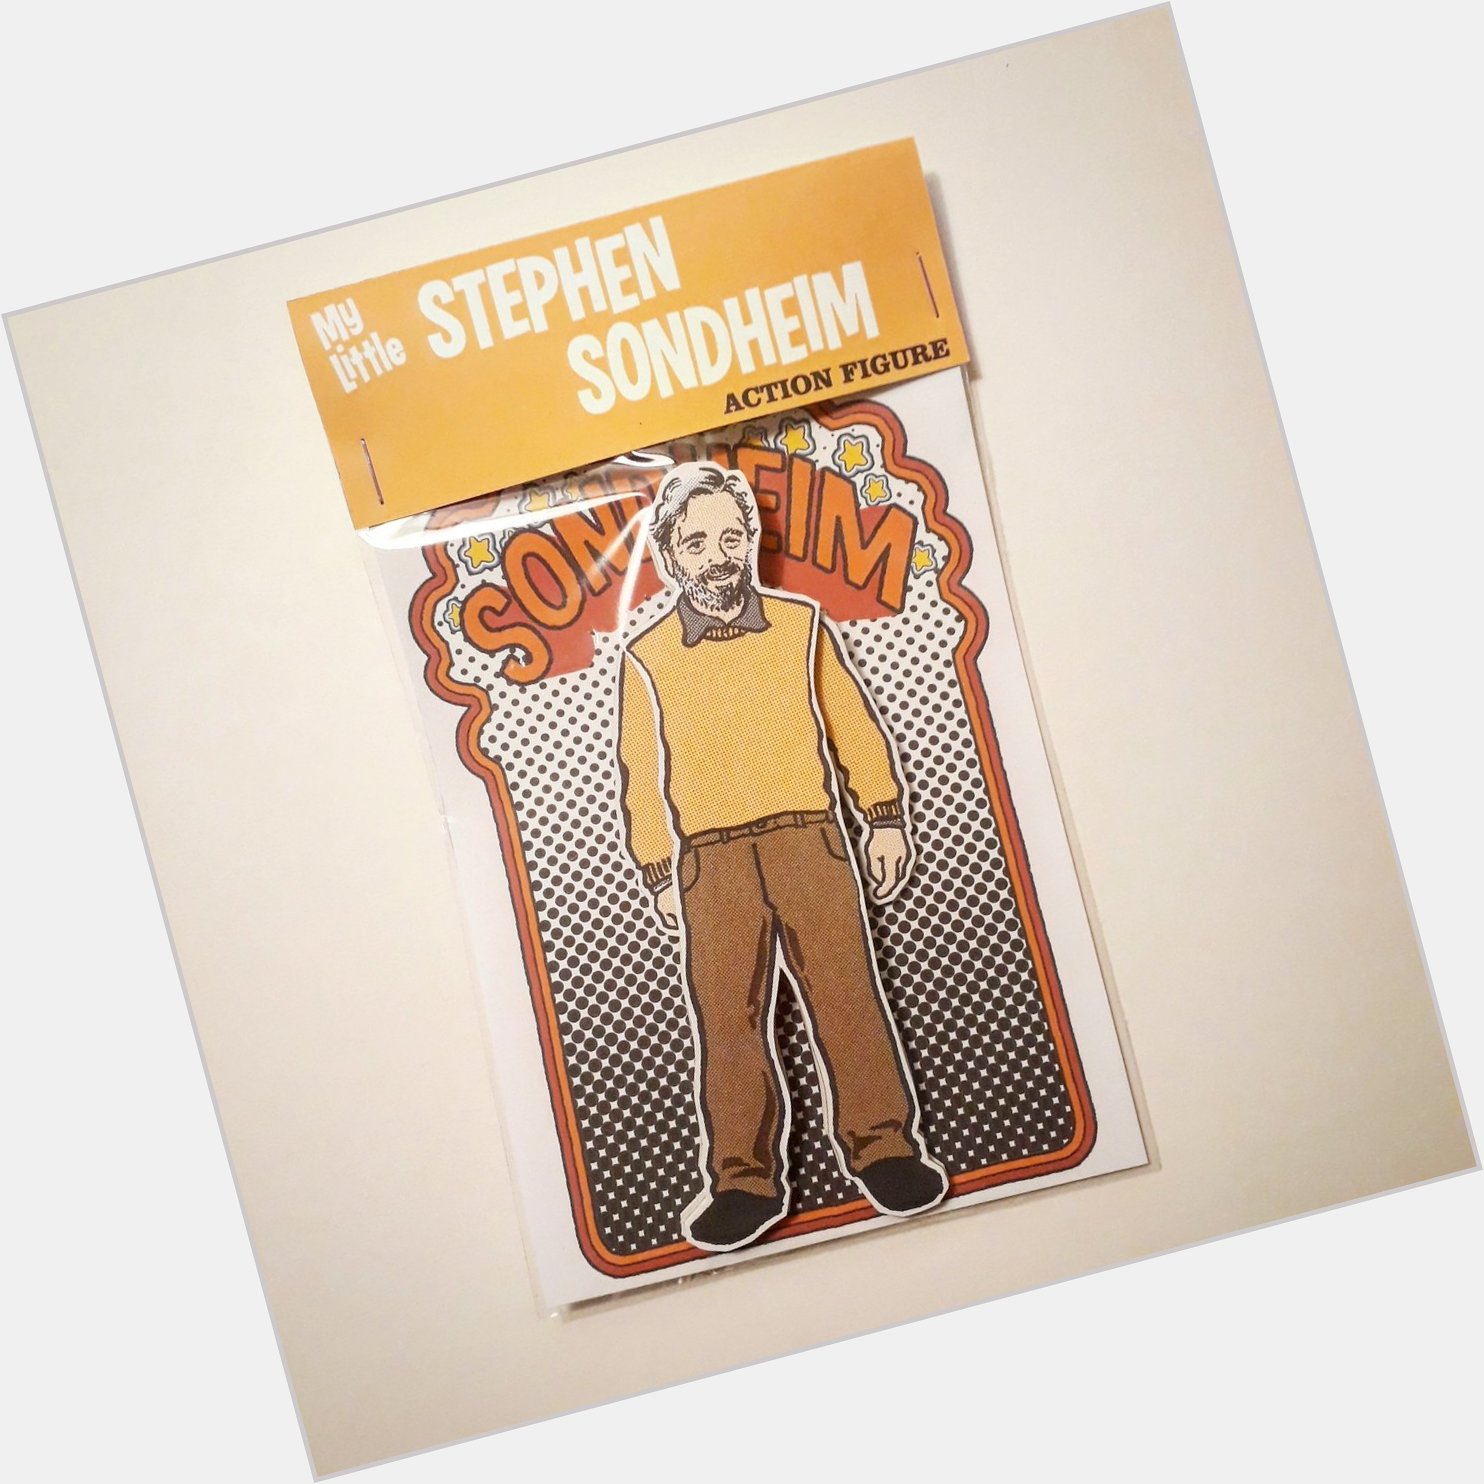 Happy 90th birthday Stephen Sondheim. A Great among greats. 